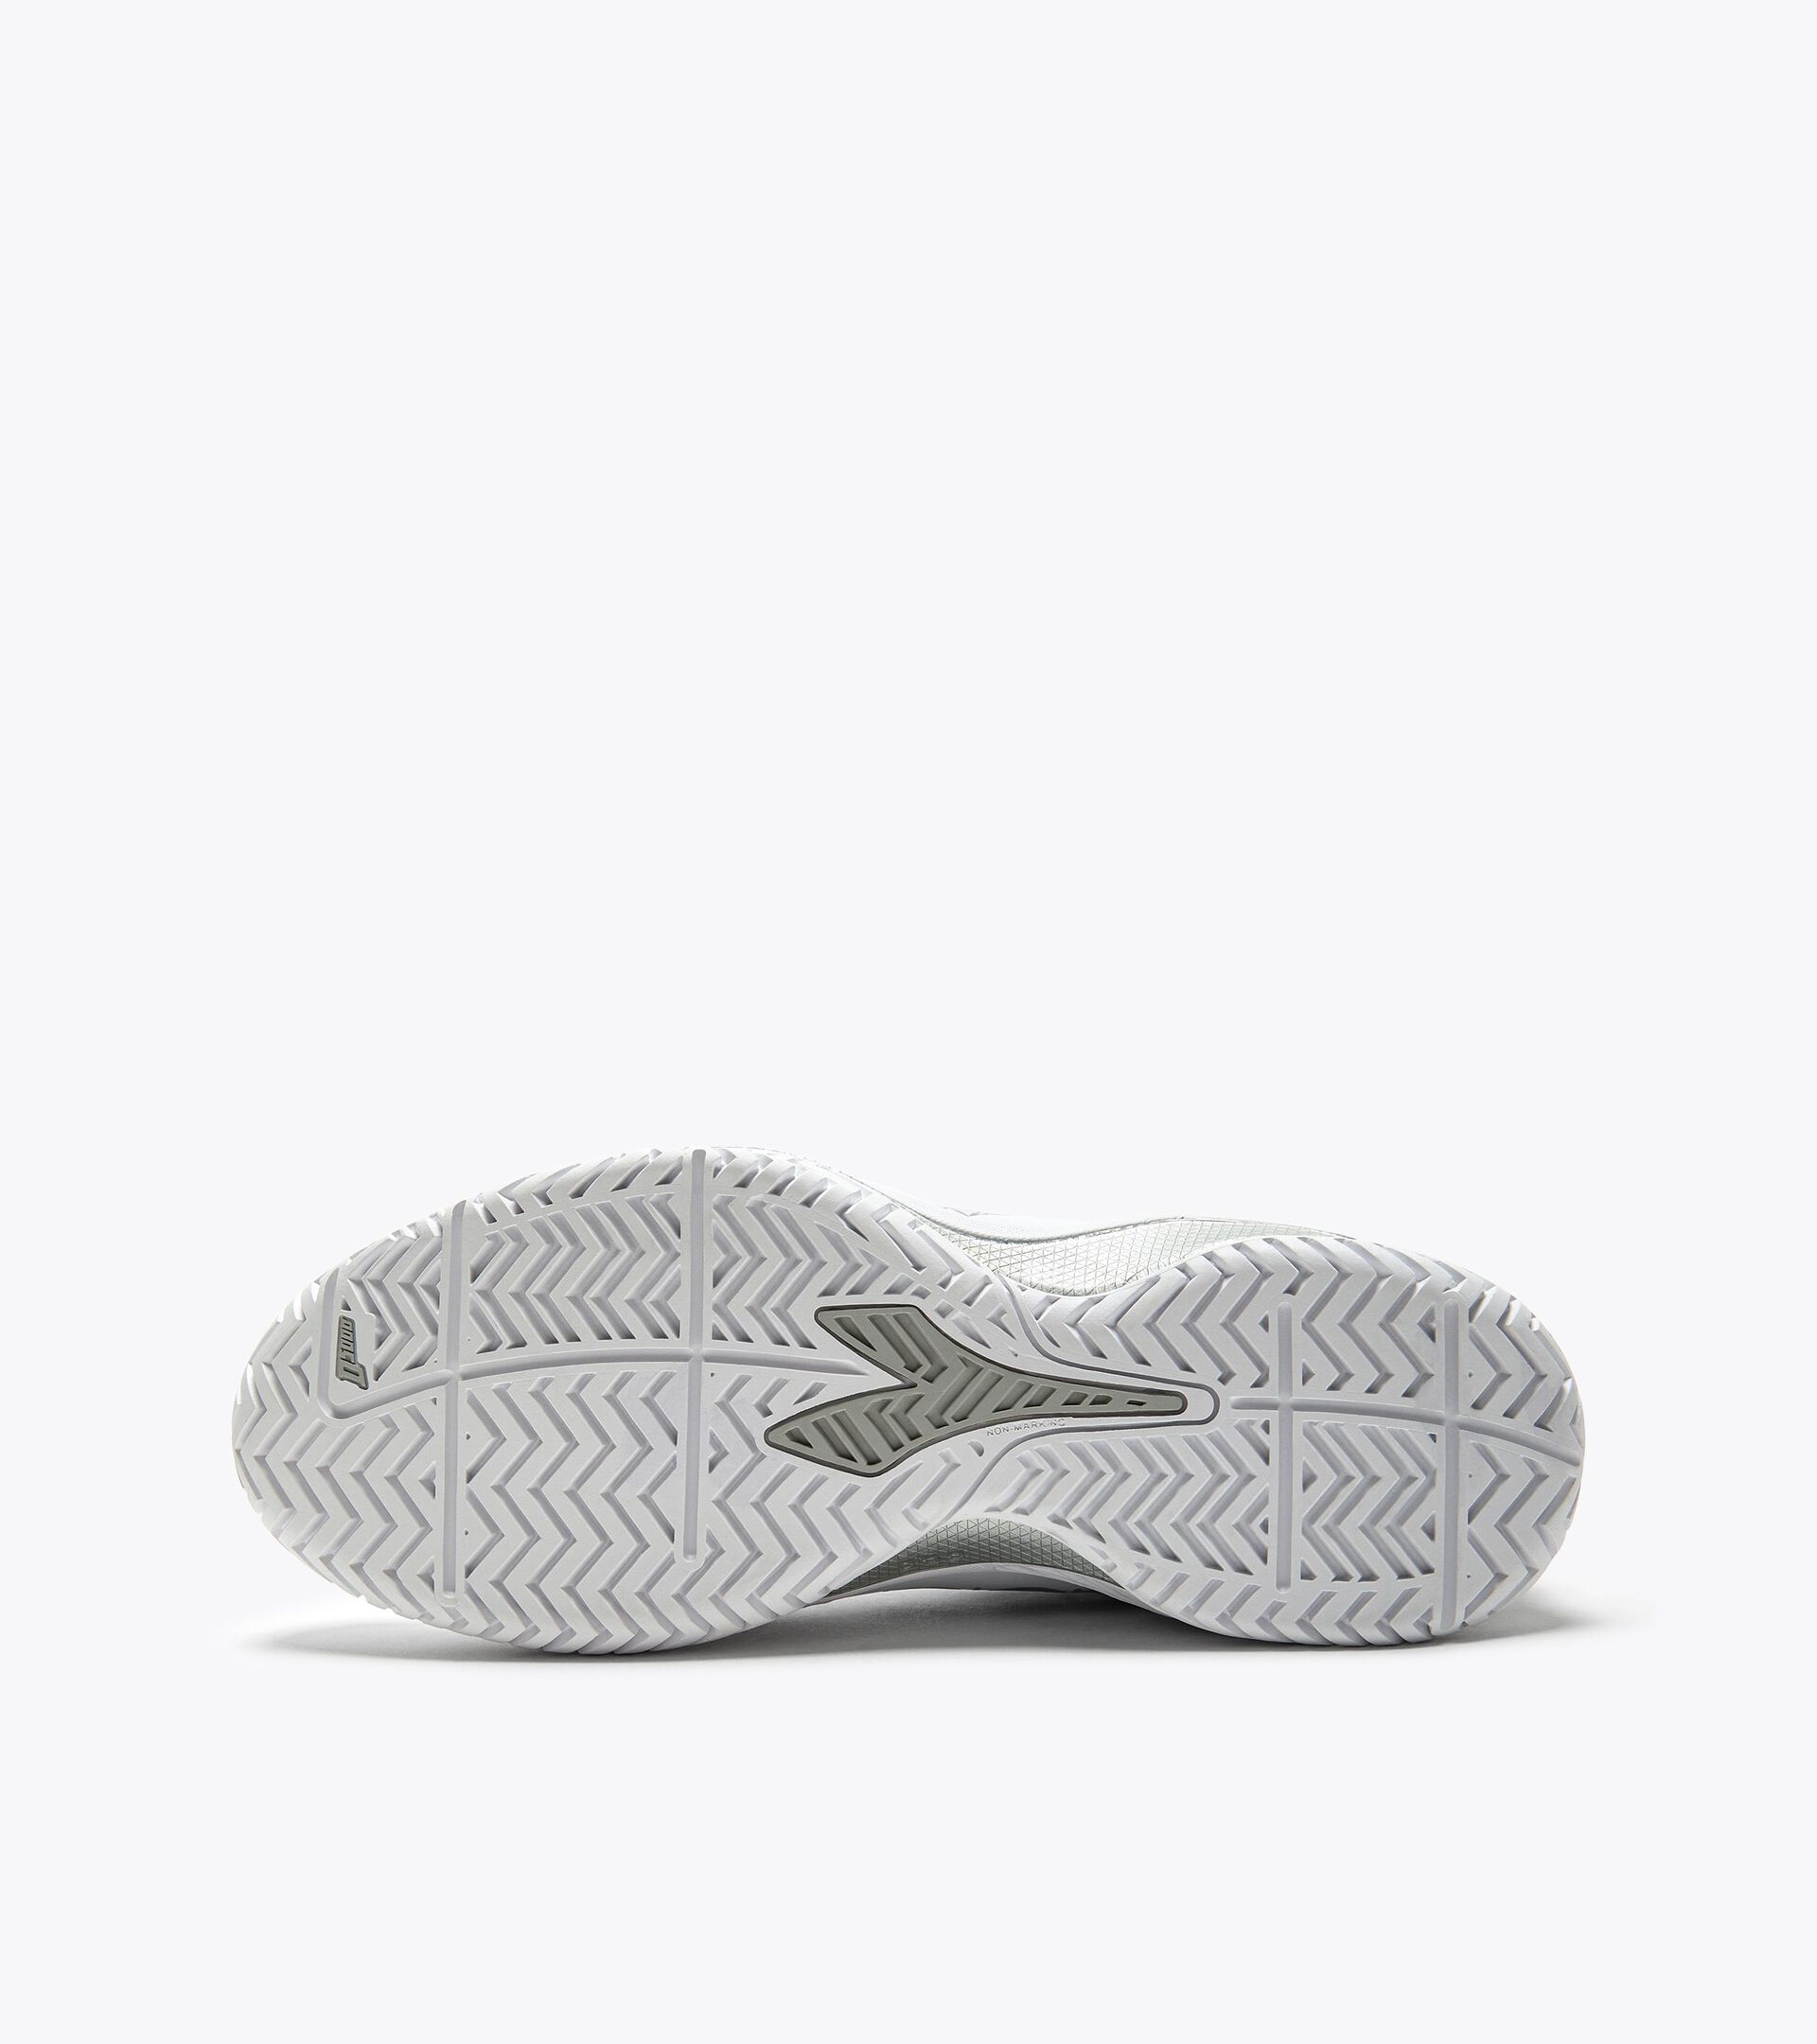 Tennis shoes for hard surfaces or clay courts - Women BLUSHIELD TORNEO 2 W AG WHITE/WHITE/WHITE - Diadora